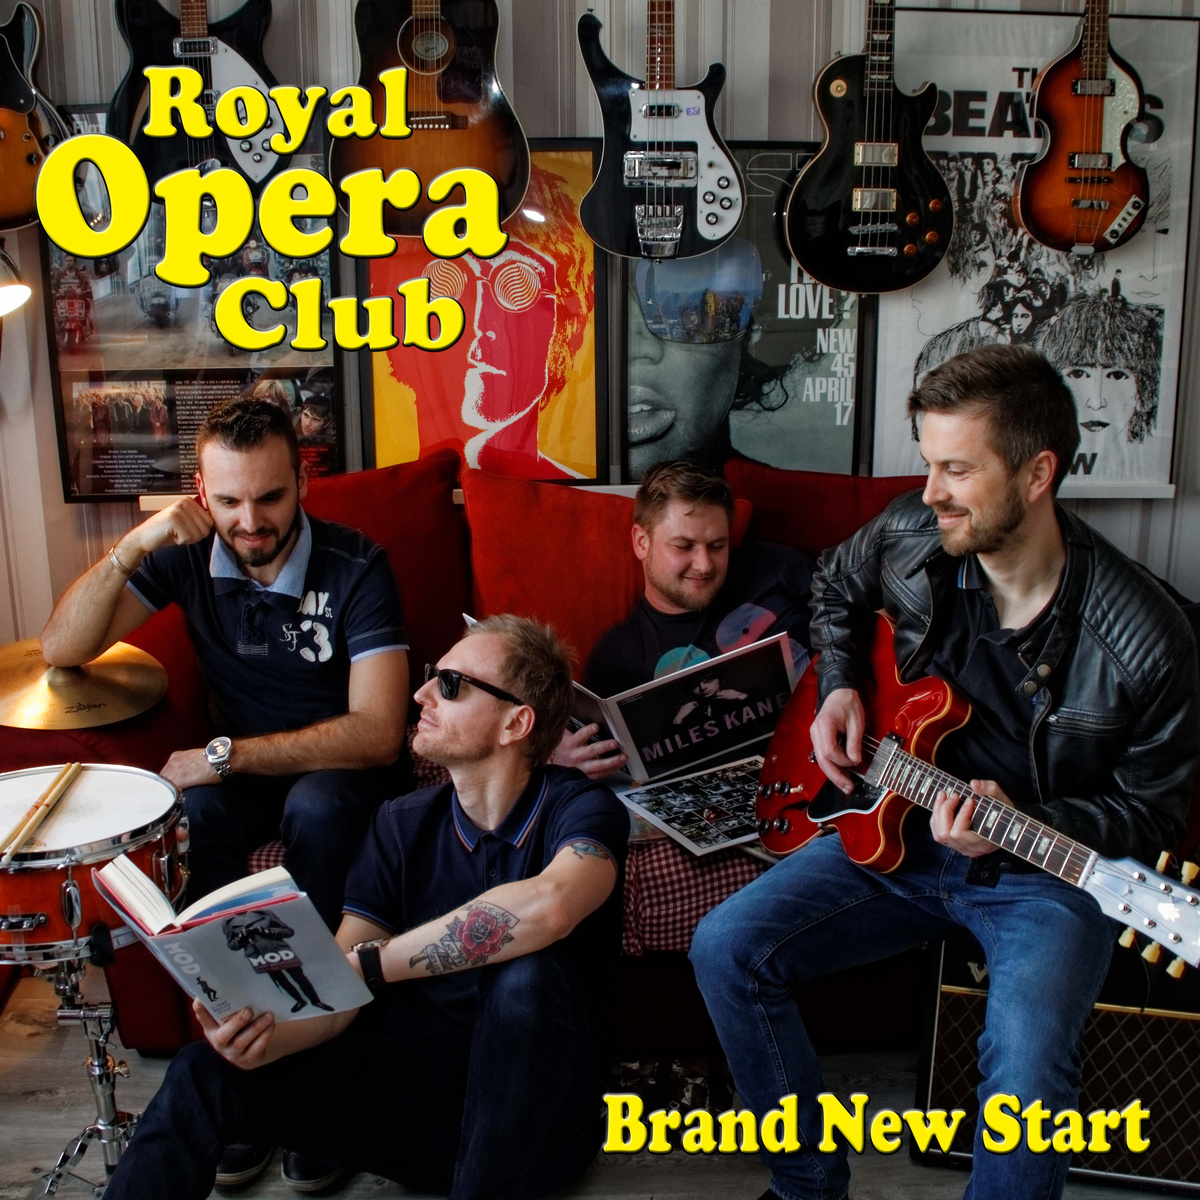 « Brand New Start » de Royal Opera Club